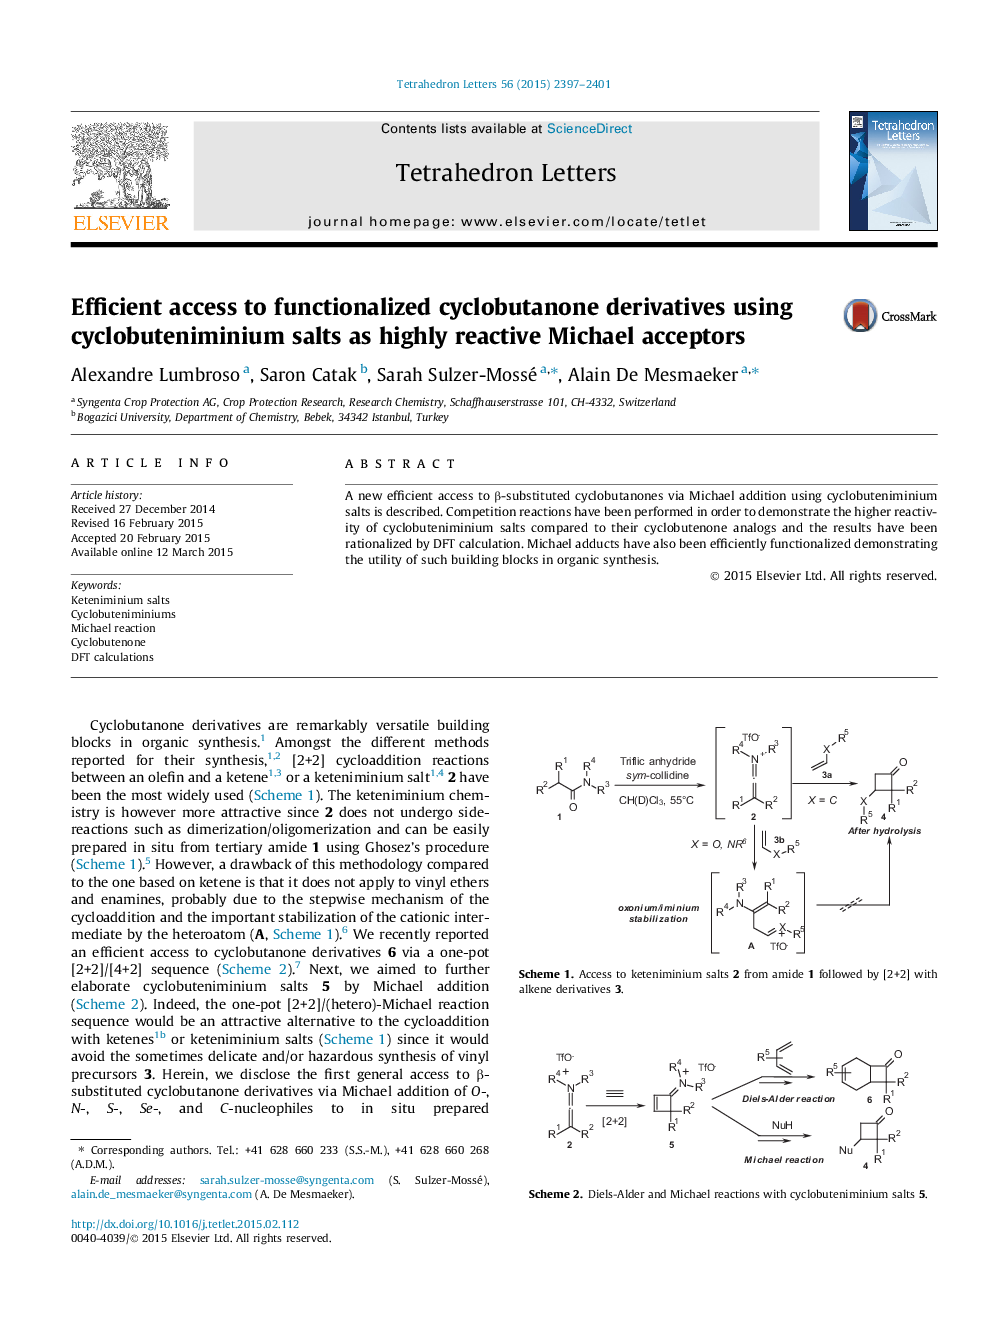 Efficient access to functionalized cyclobutanone derivatives using cyclobuteniminium salts as highly reactive Michael acceptors